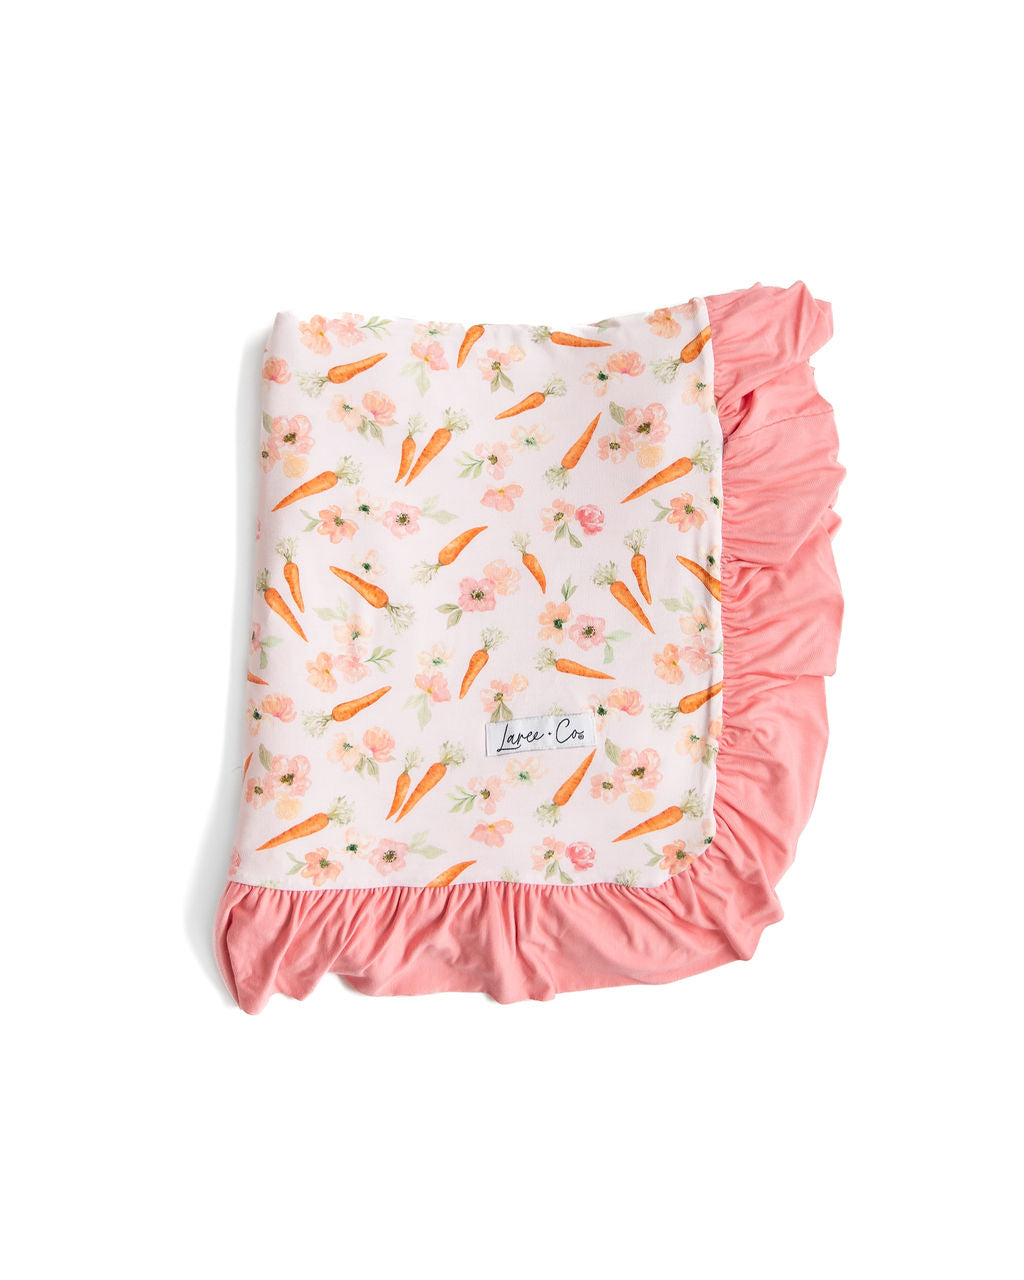 Lillian's Pink Easter Carrots Bamboo Ruffle Toddler Blanket